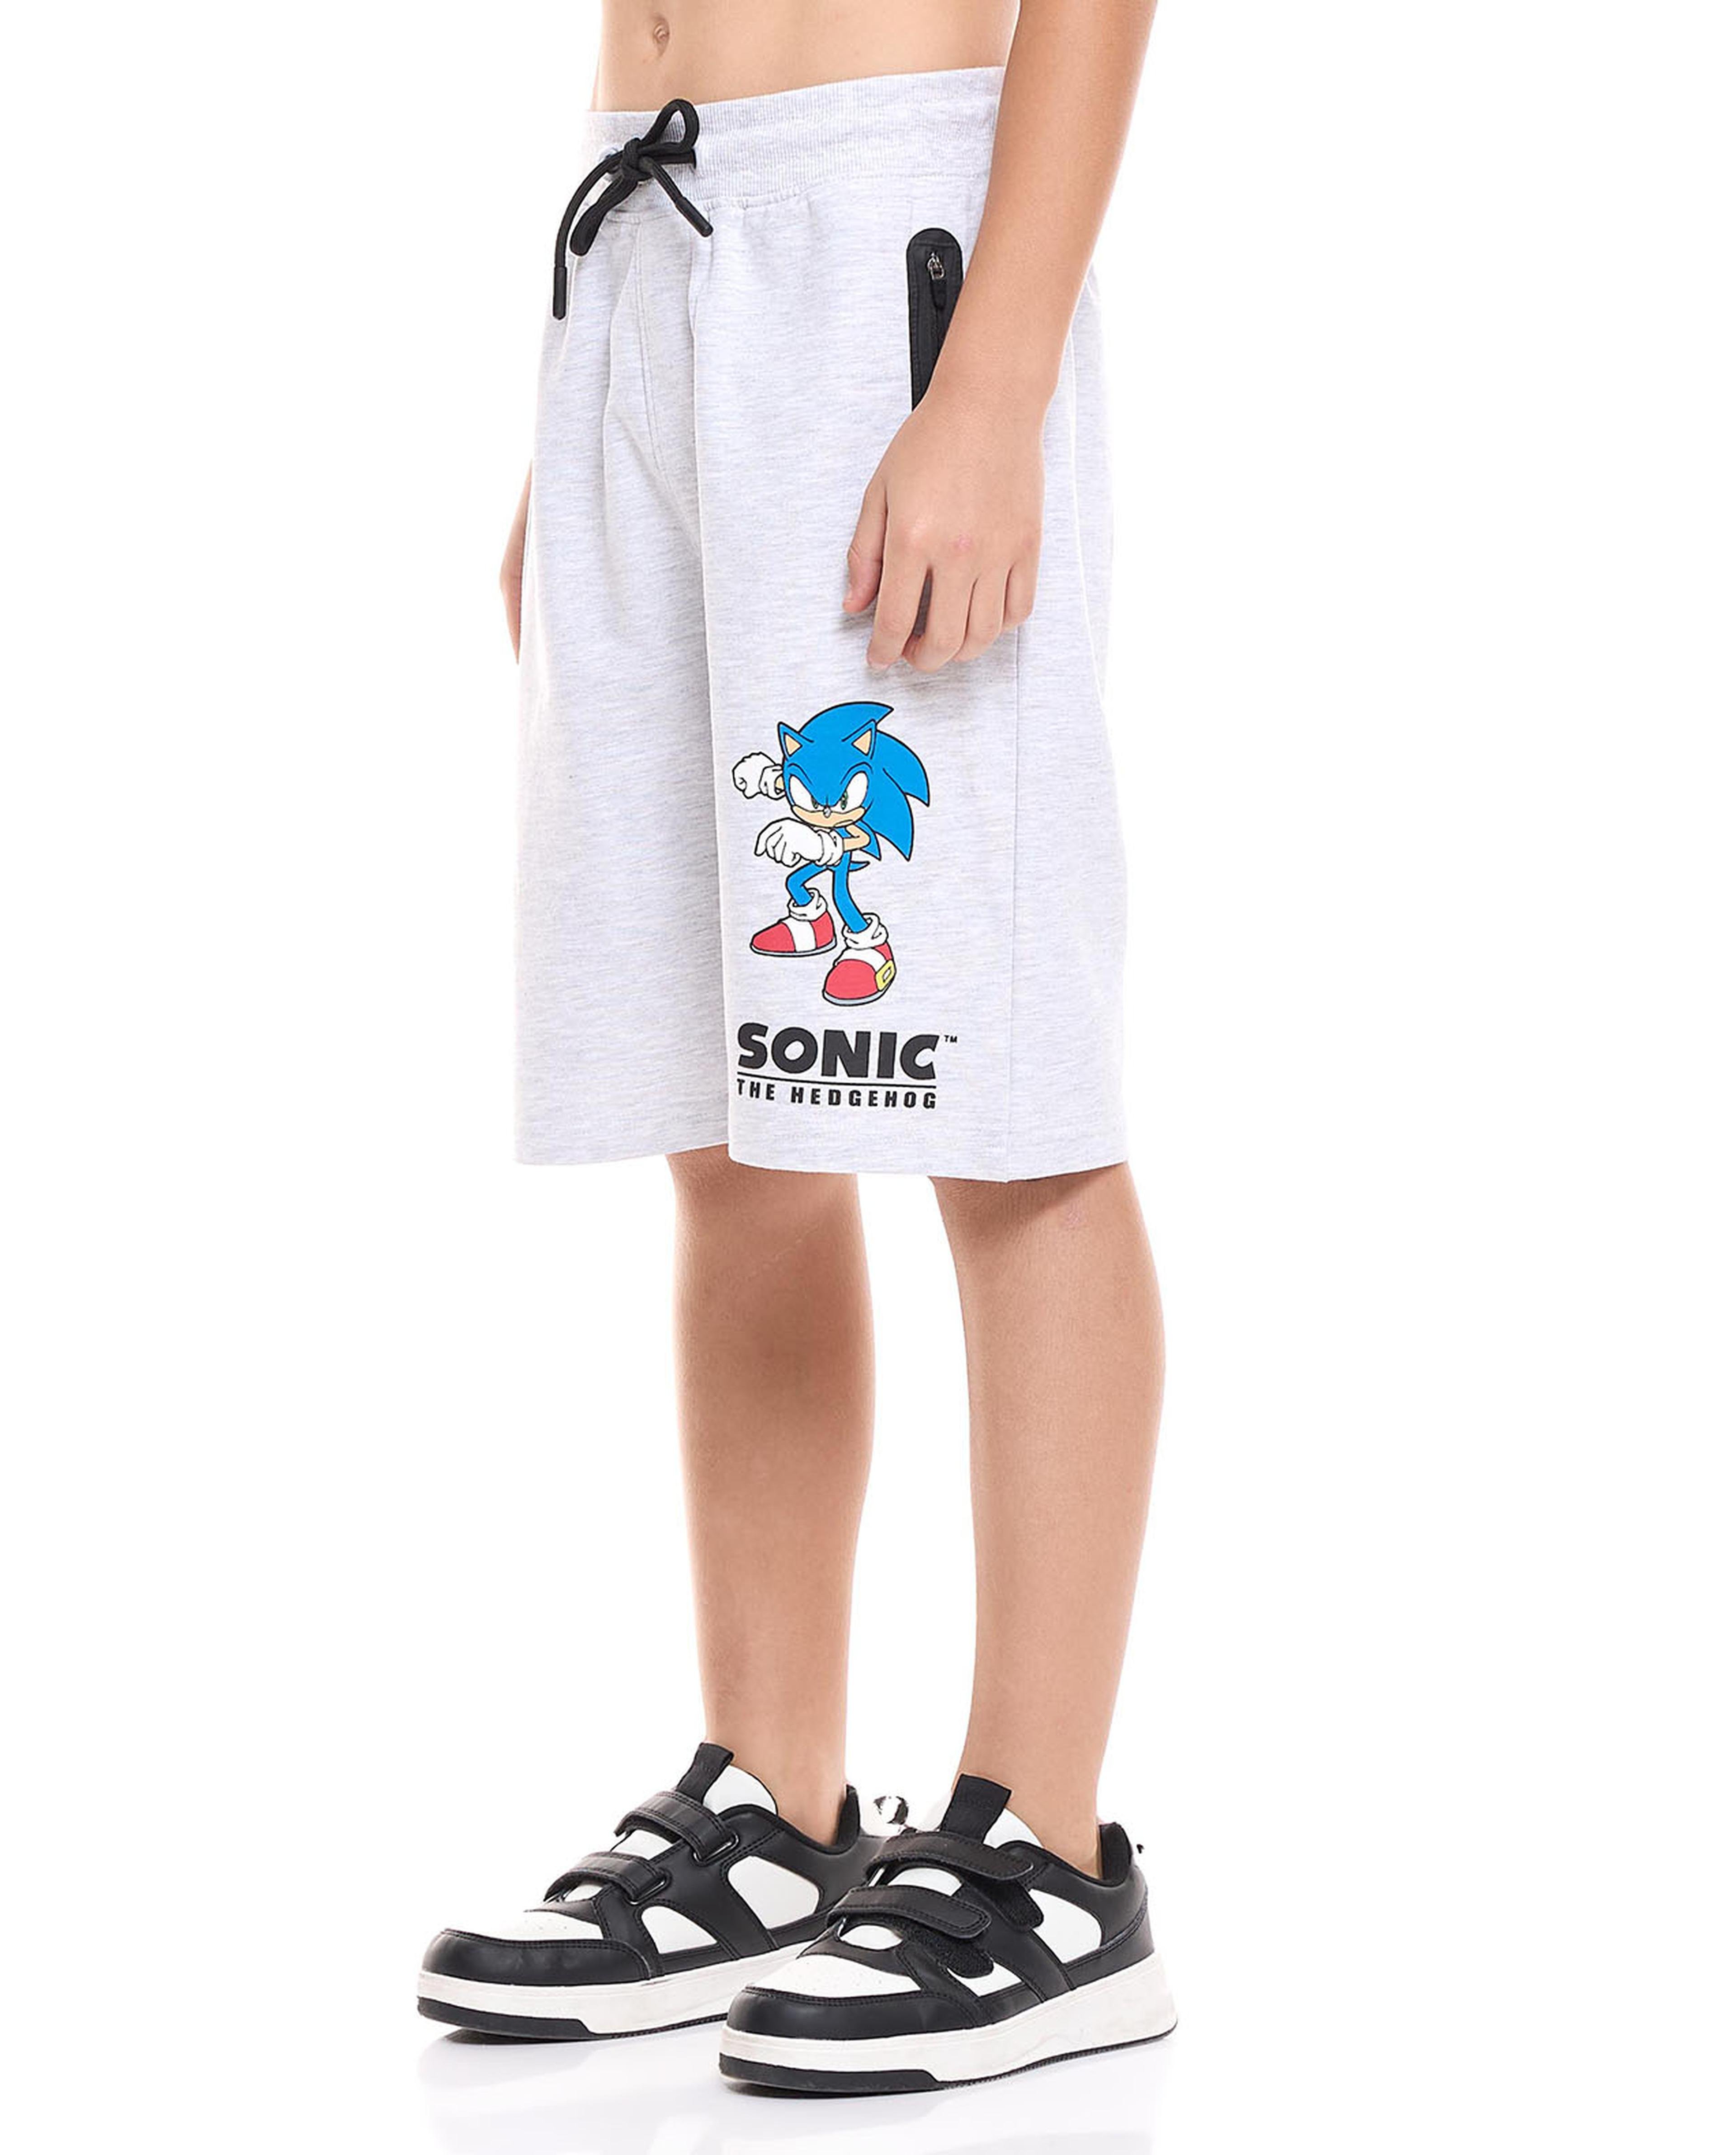 Sonic Print Shorts with Drawstring Waist